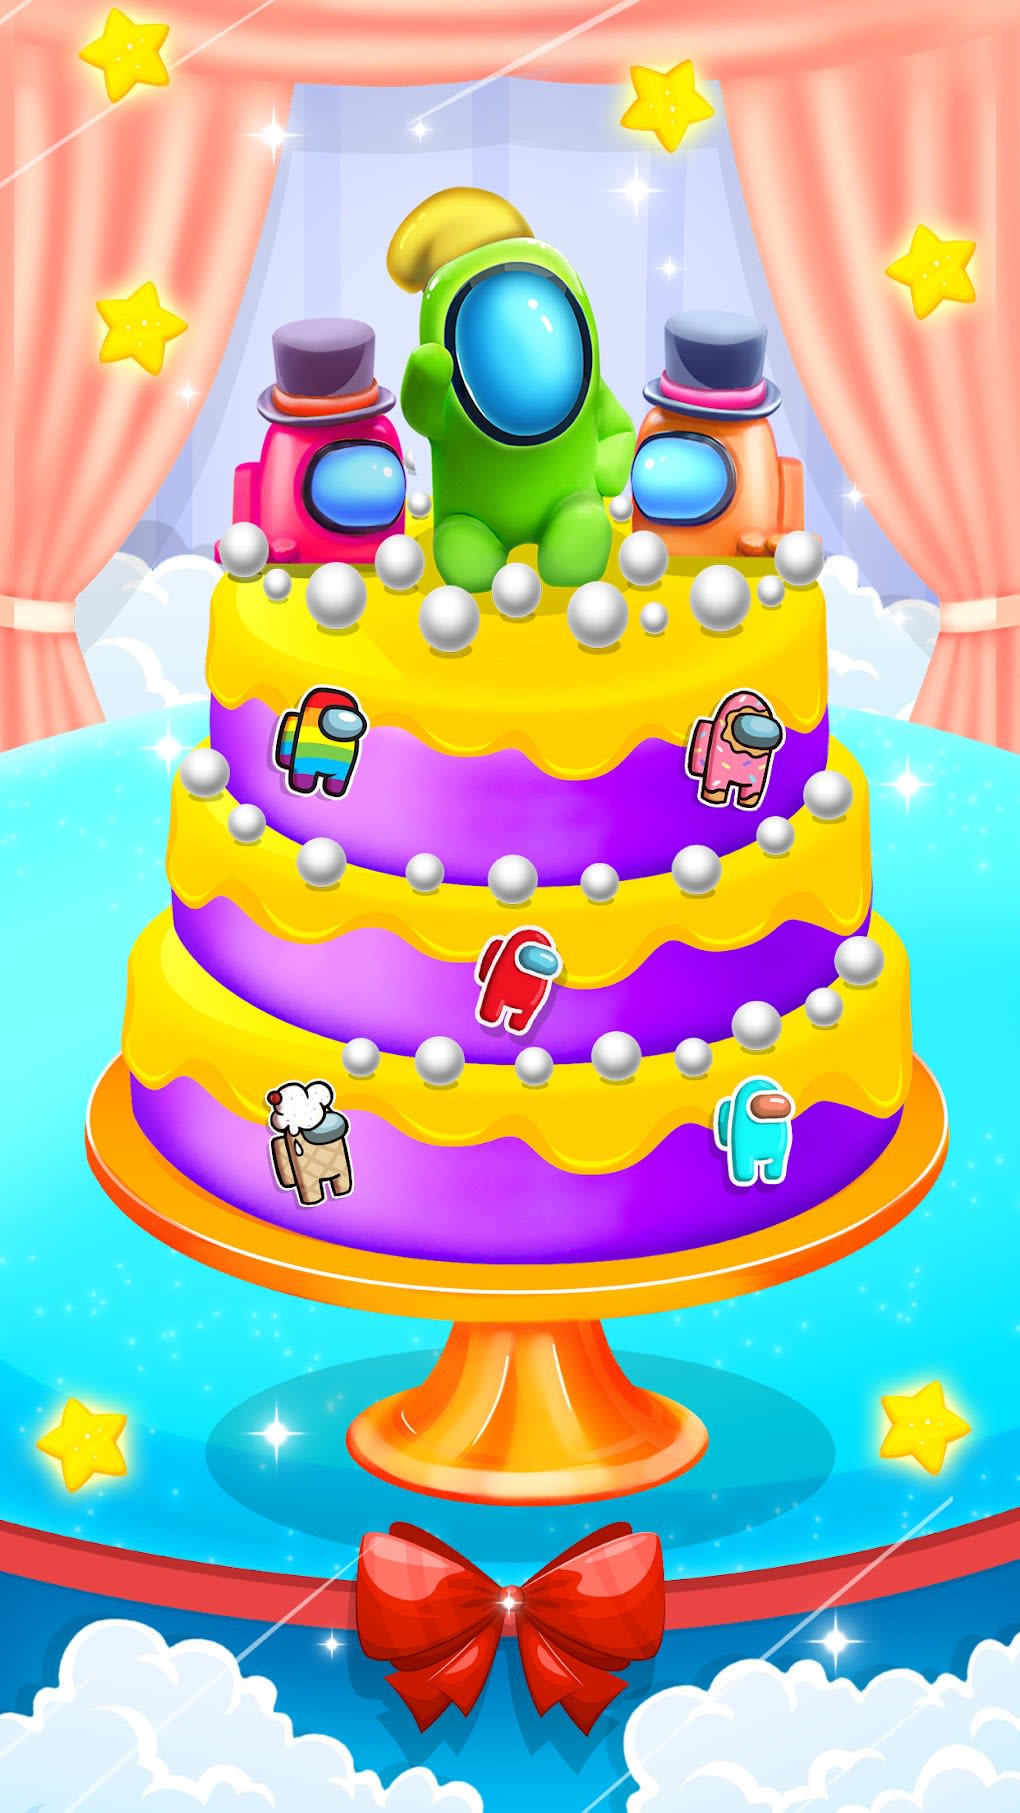 Birthday Cake Baking Games APK (Android Game) - Free Download